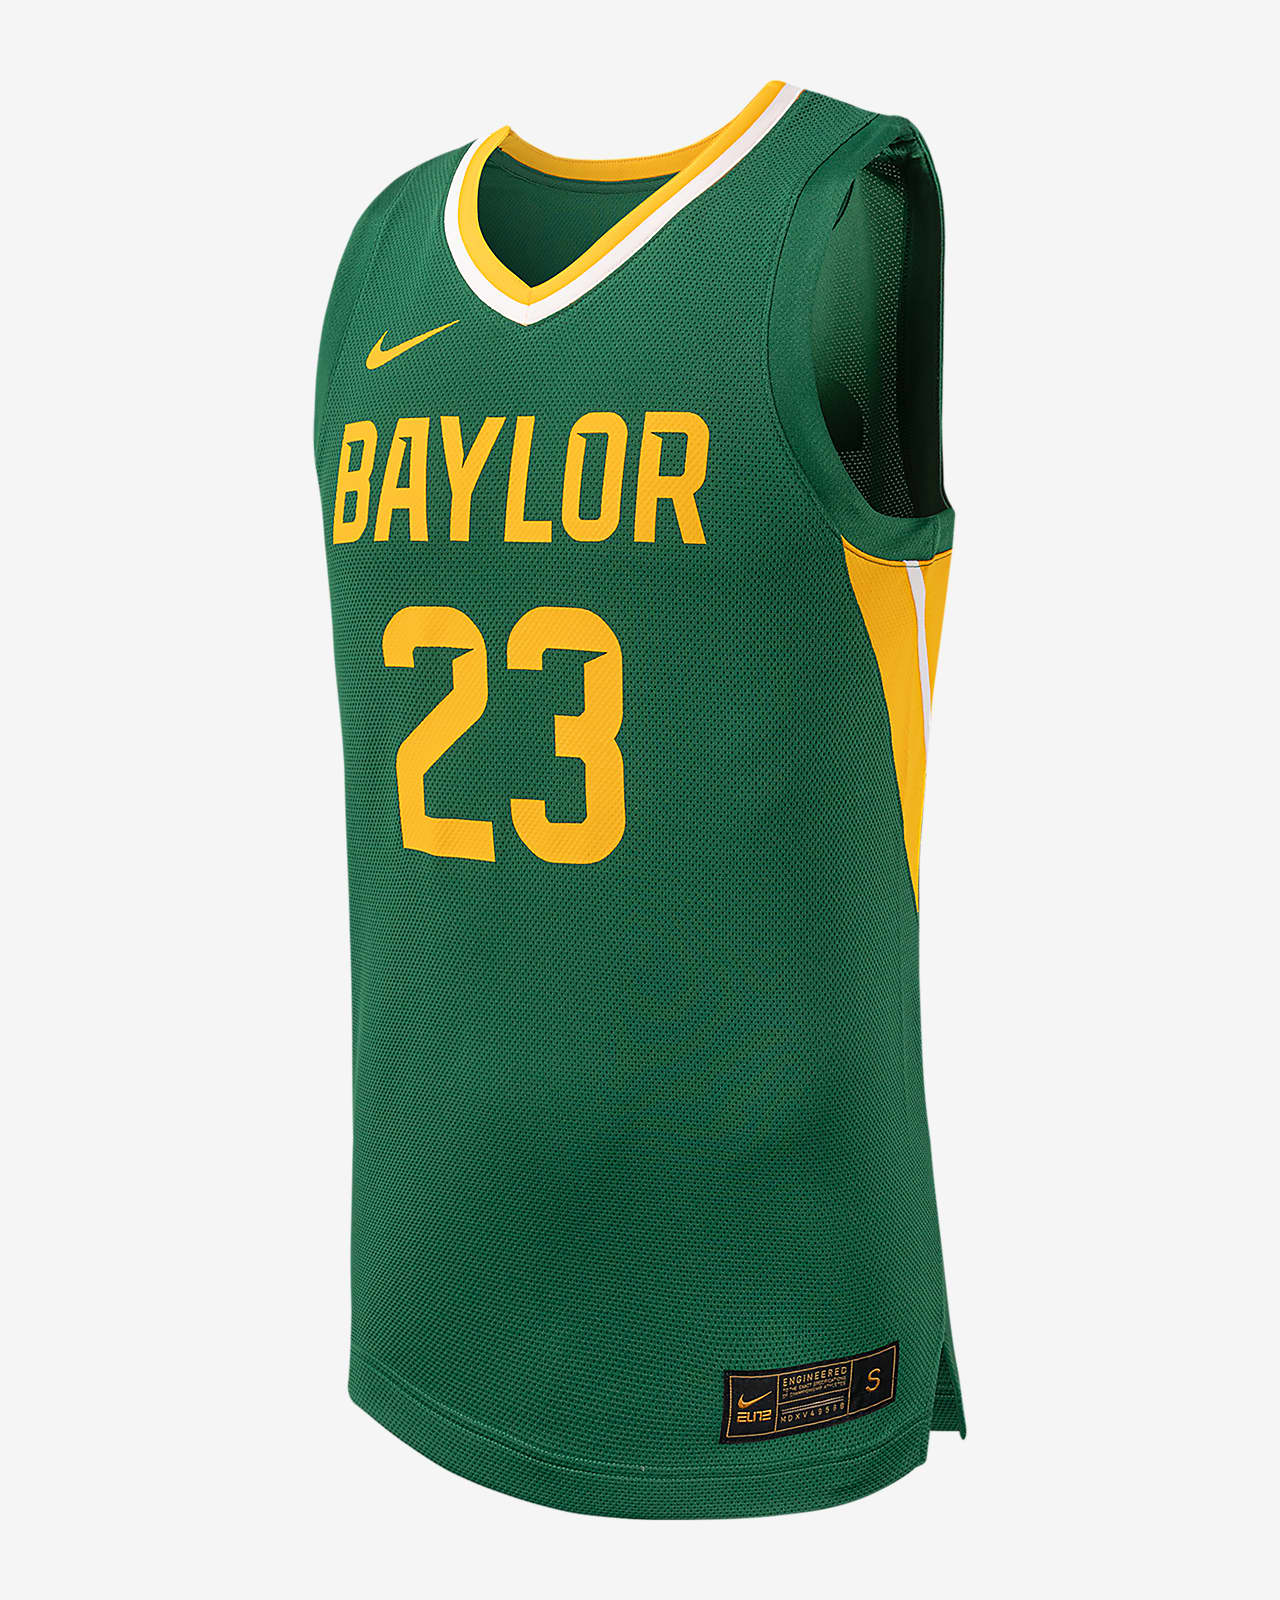 Baylor Men's Nike College Basketball Replica Jersey